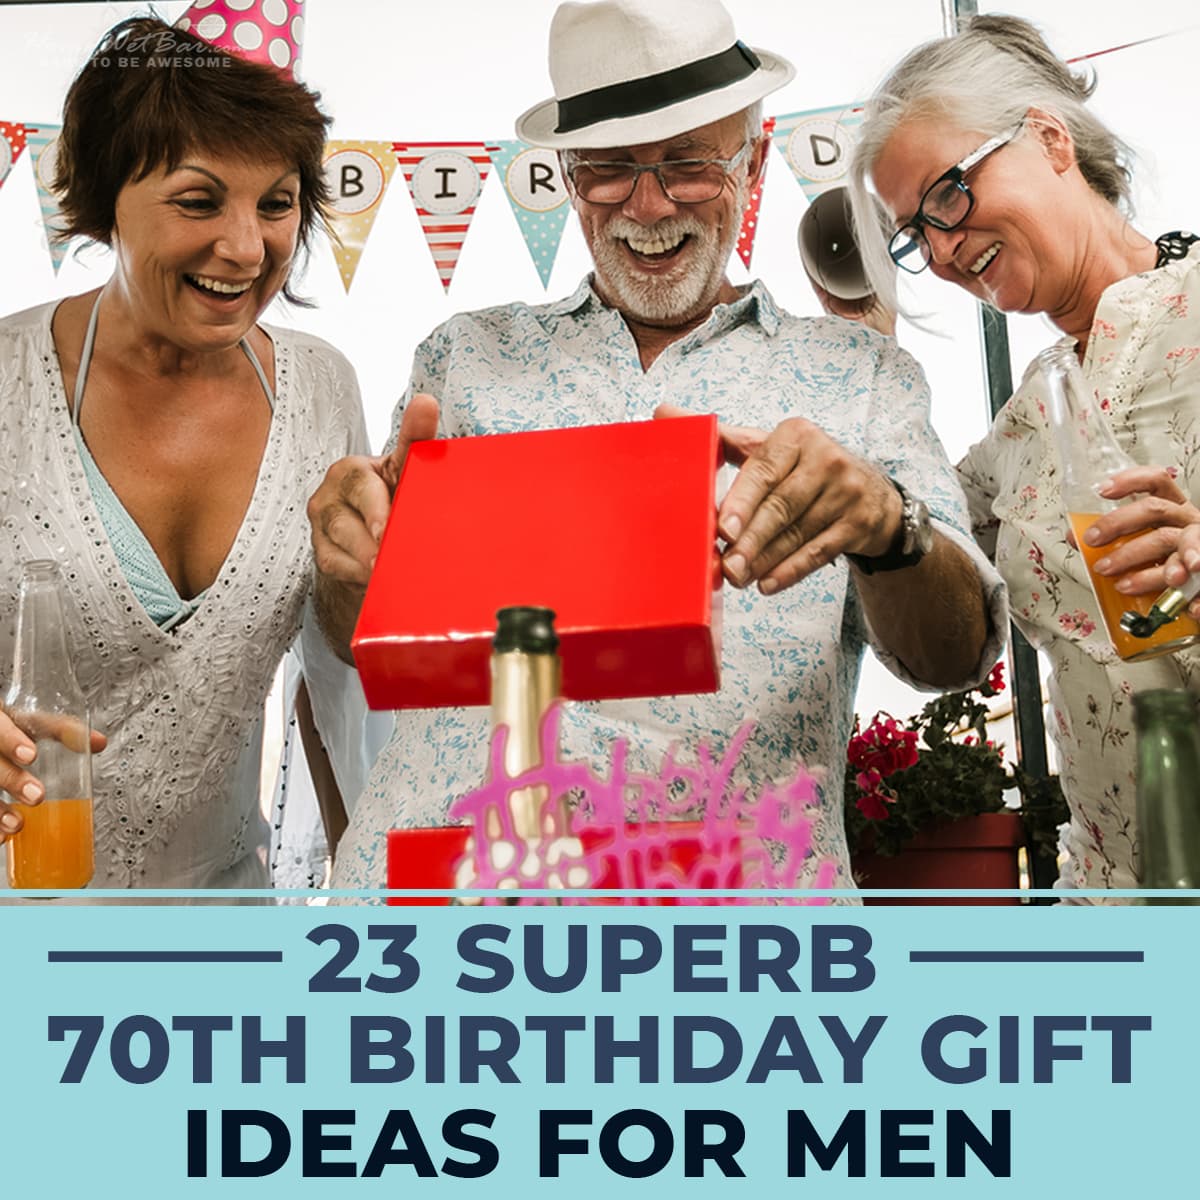 23 Superb 70th Birthday Gift Ideas for Men